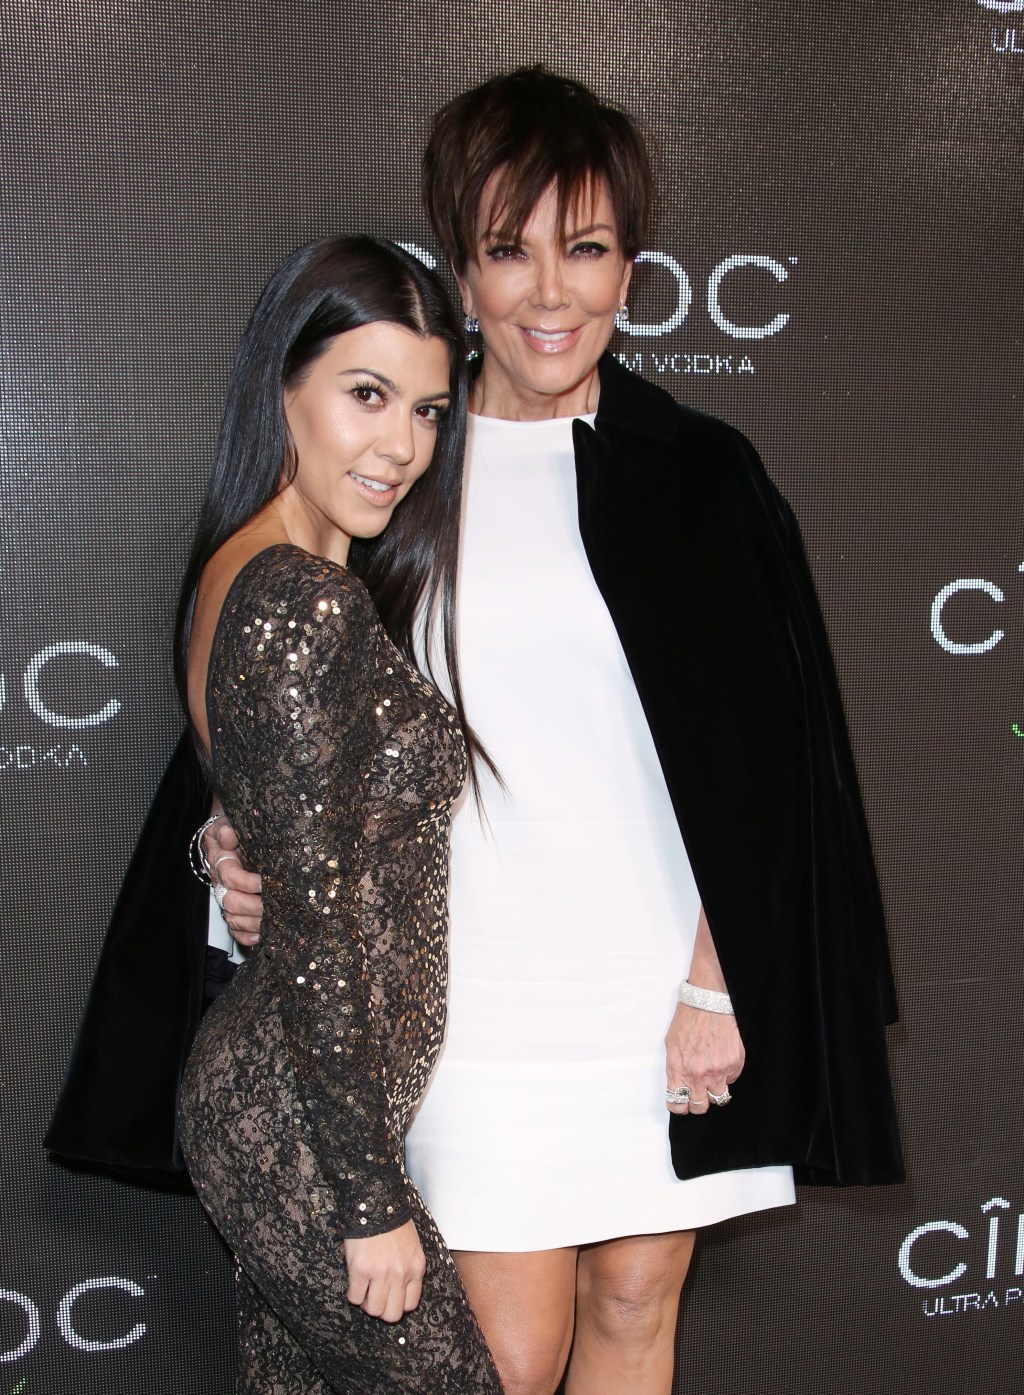 Kourtney Kardashian and Kris Jenner